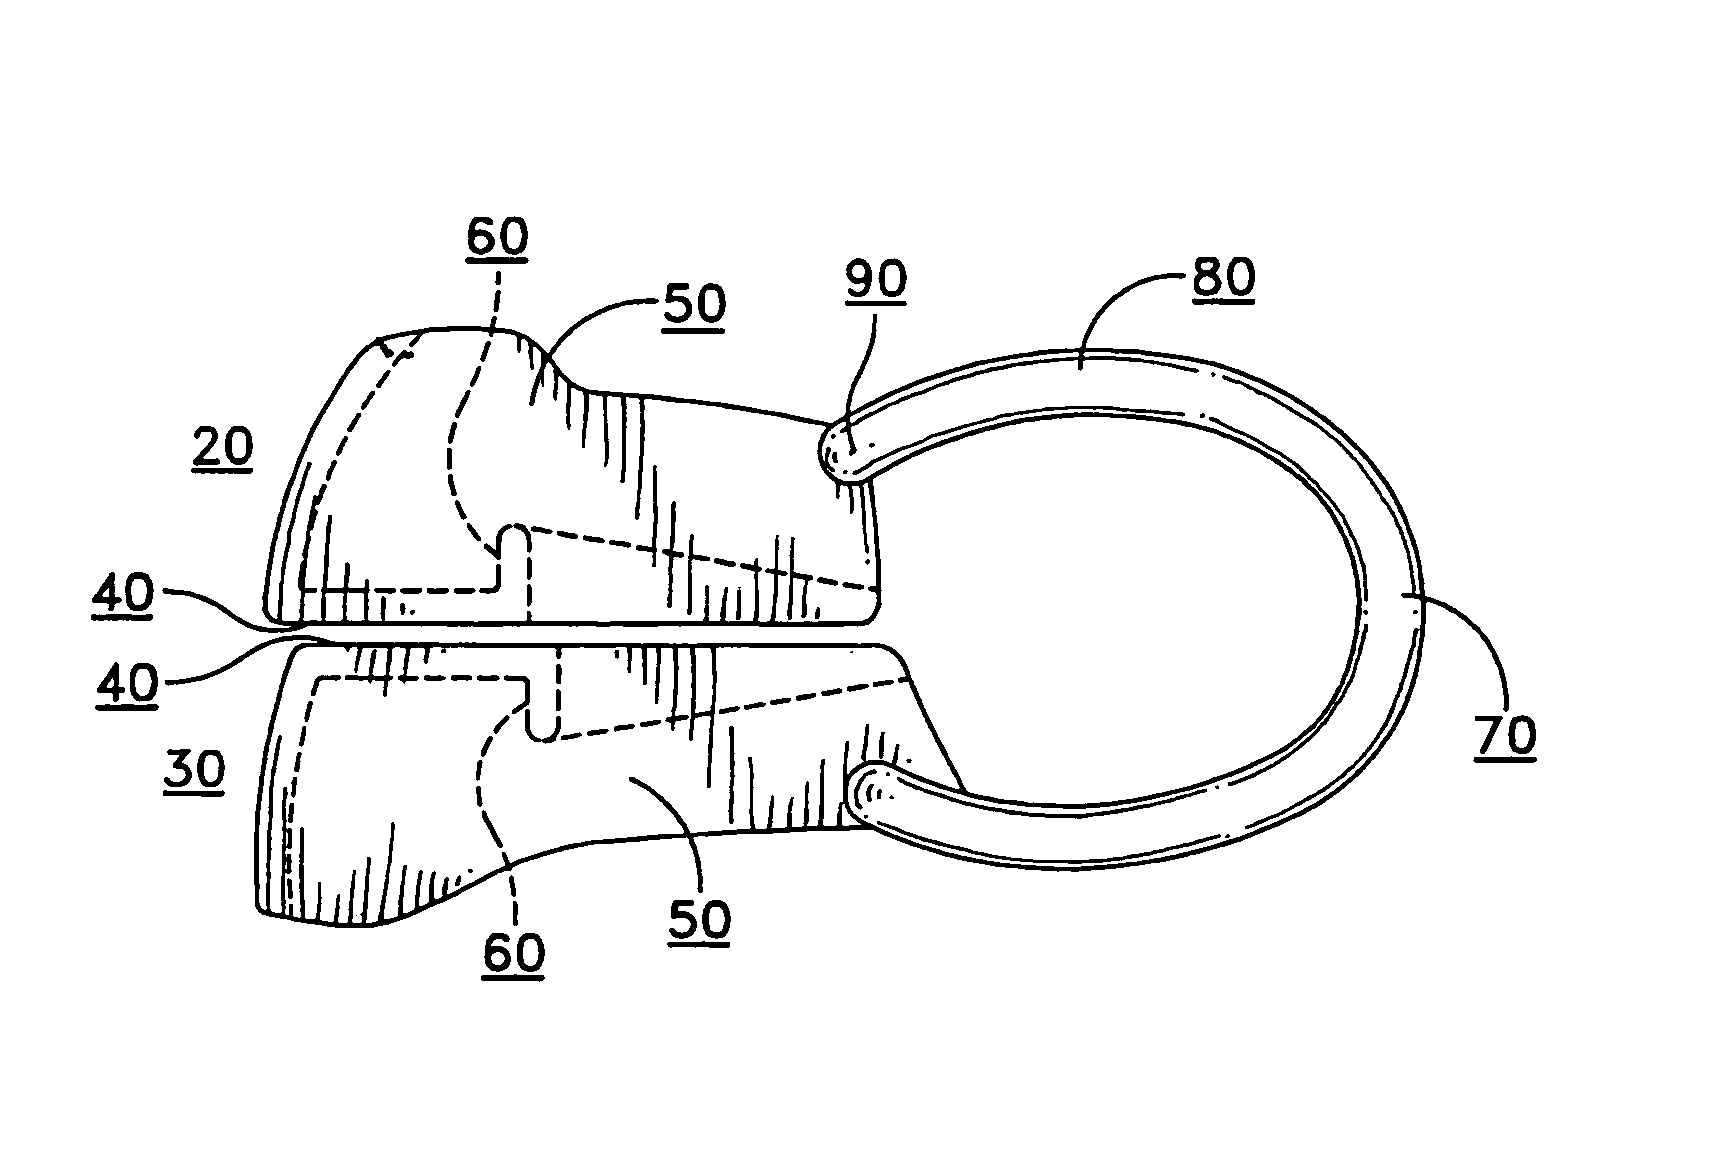 Anterior sextant dental bite tray apparatus